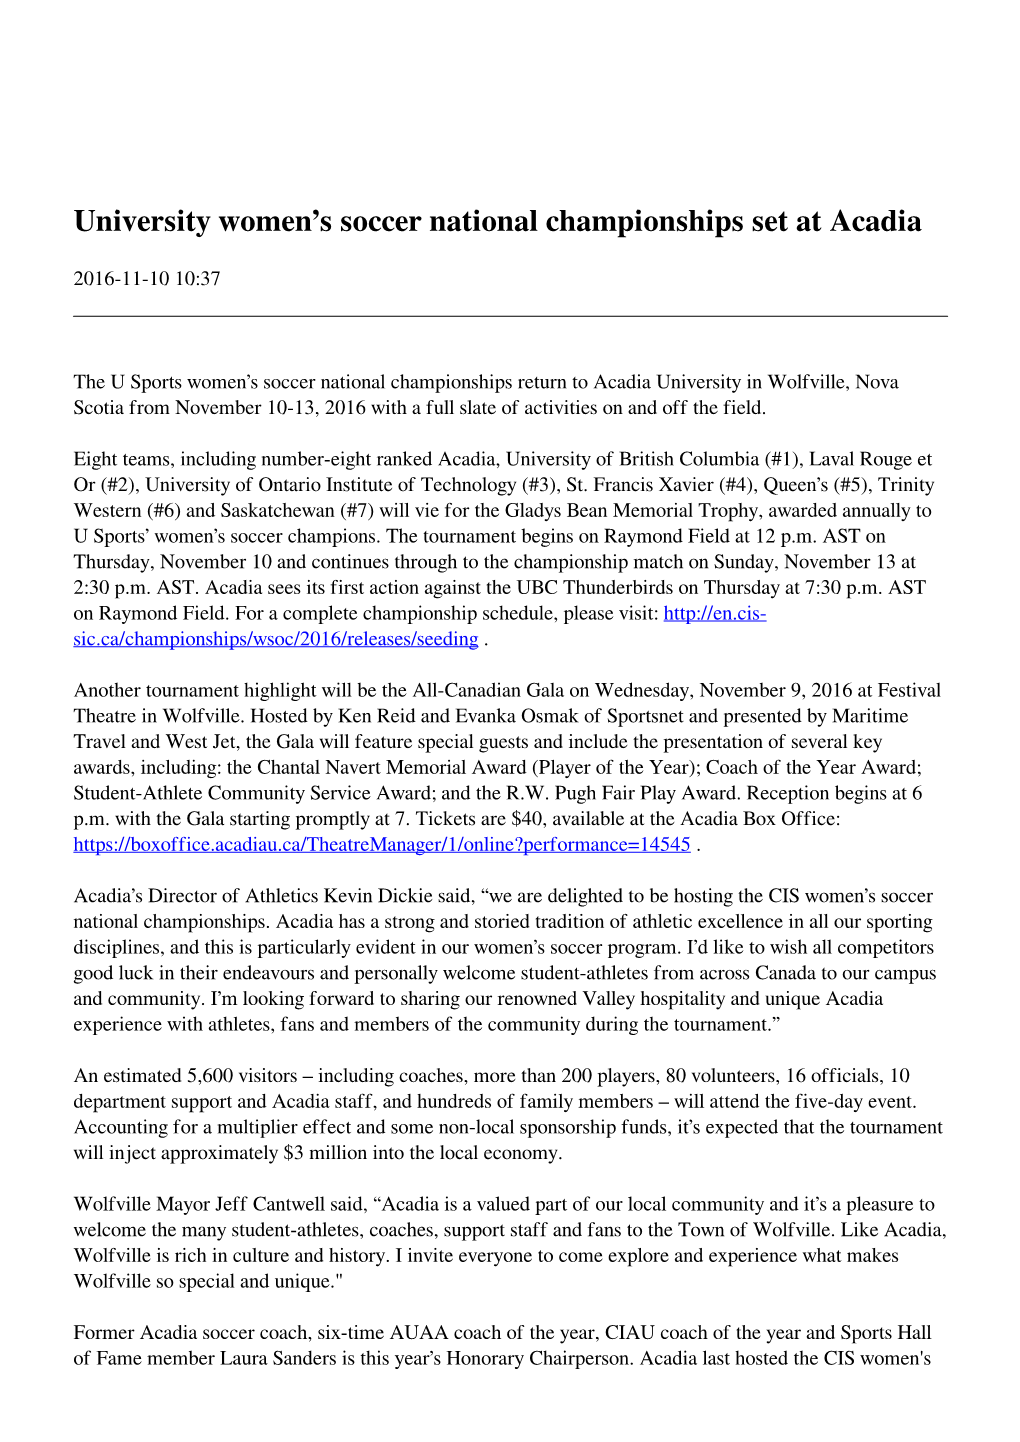 University Women's Soccer National Championships Set at Acadia